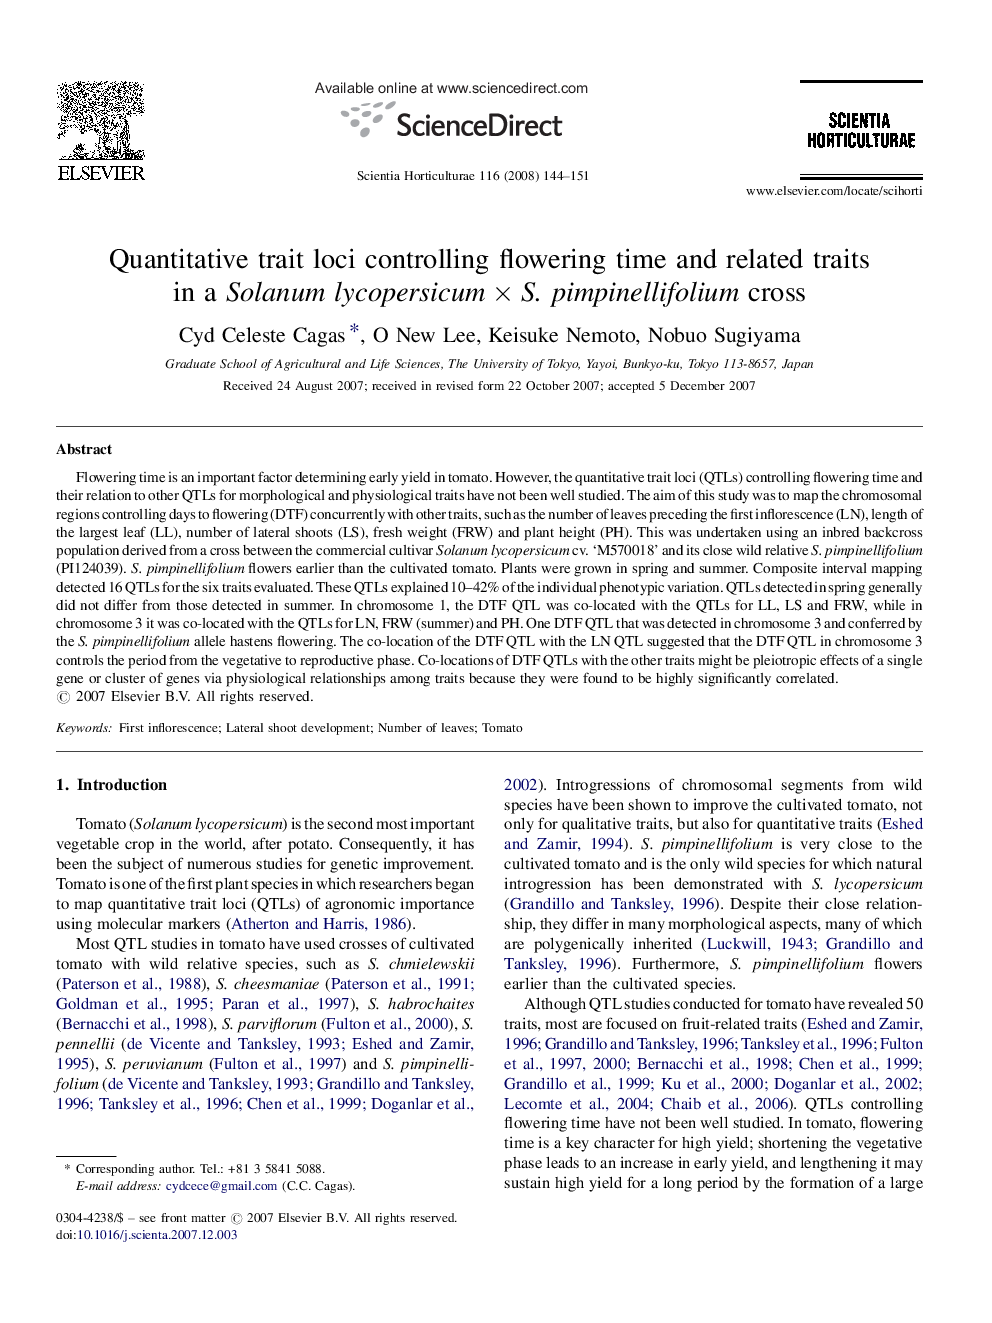 Quantitative trait loci controlling flowering time and related traits in a Solanum lycopersicumÂ ÃÂ S. pimpinellifolium cross